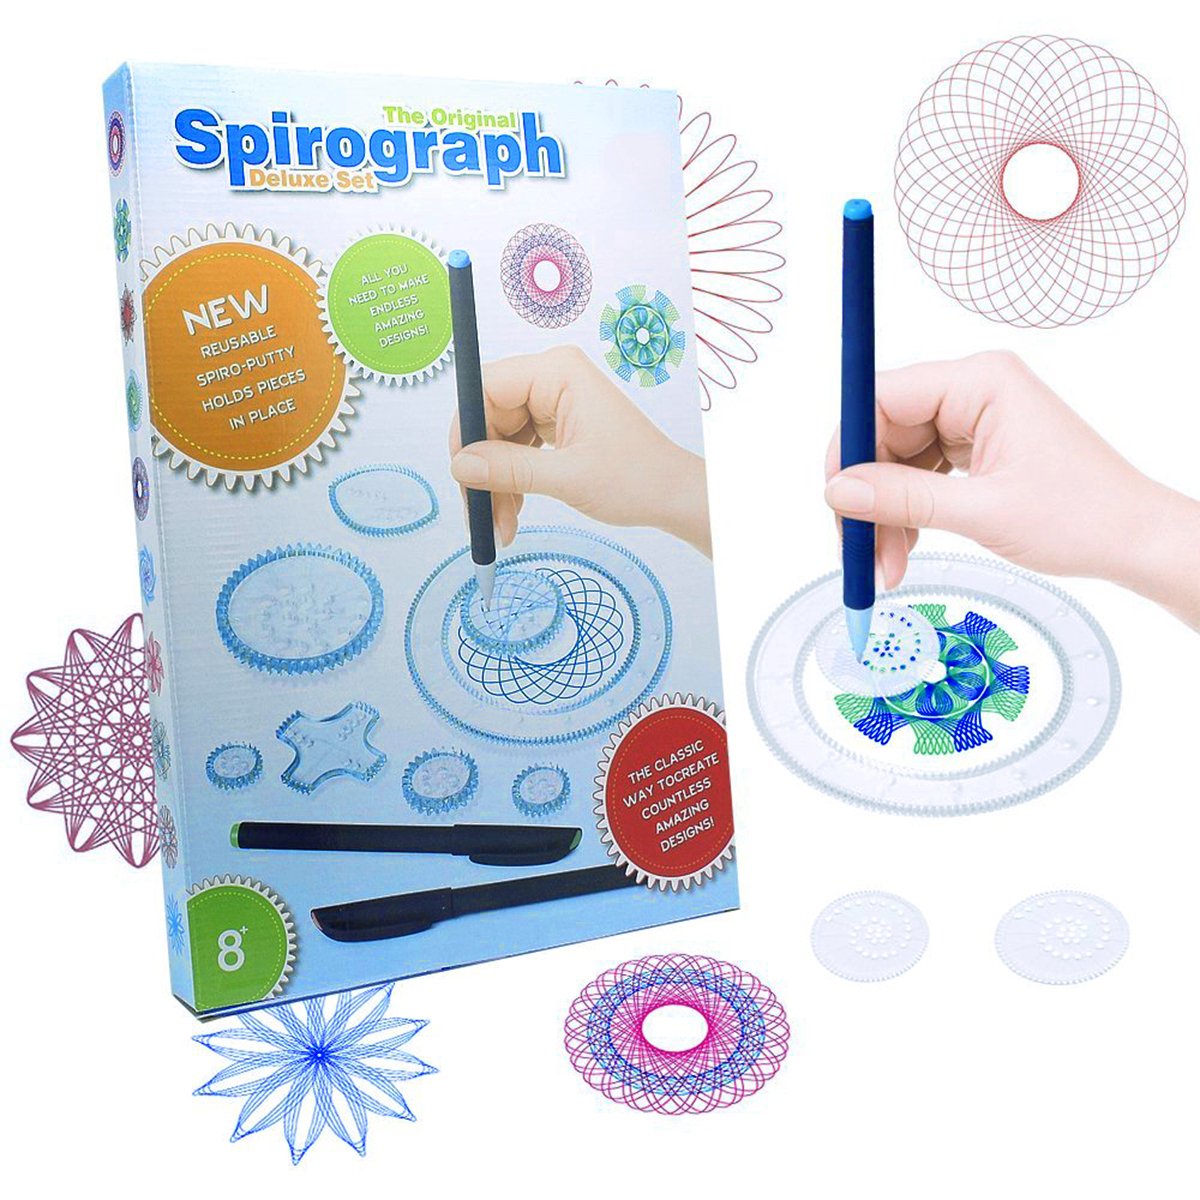 Original Spirograph Design Set Geometric Drawing Ruler Kids Spiral Art Craft Creation Education Toy 2